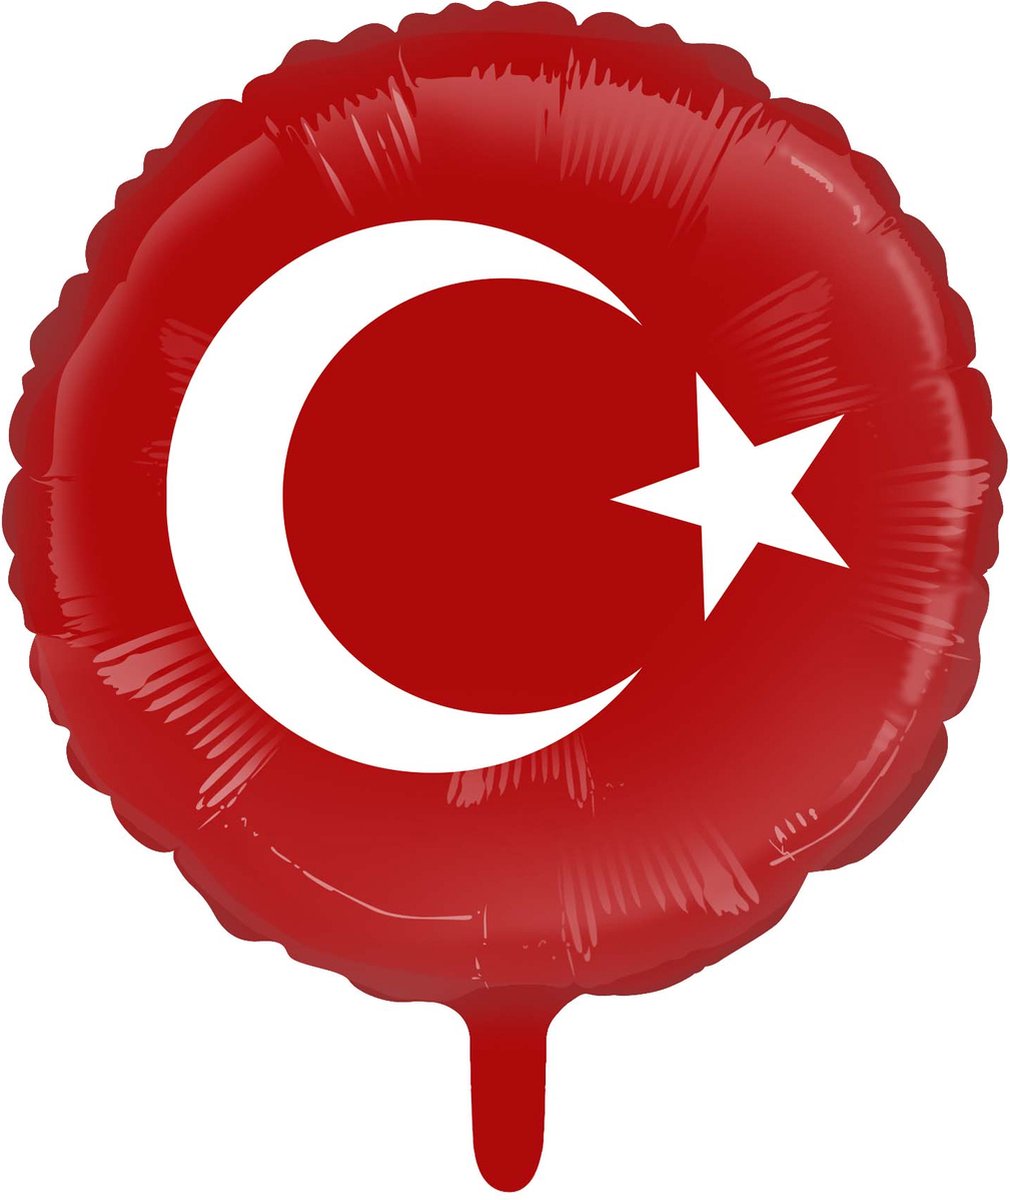 Folieballon 45cm vlag Turkije